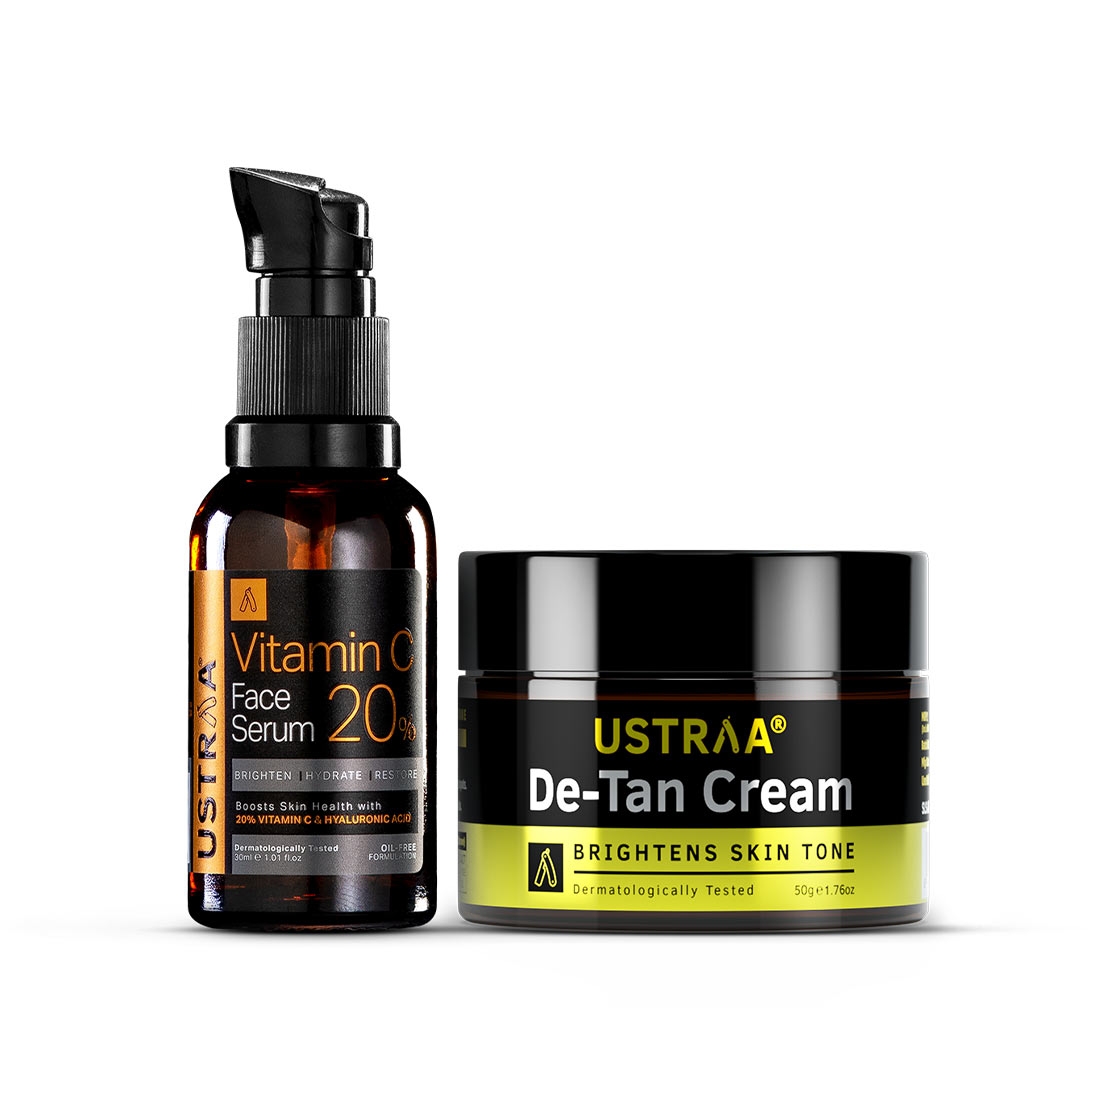 Ustraa Vitamin C Face Serum - 30ml & De-Tan Cream for Men - 50g